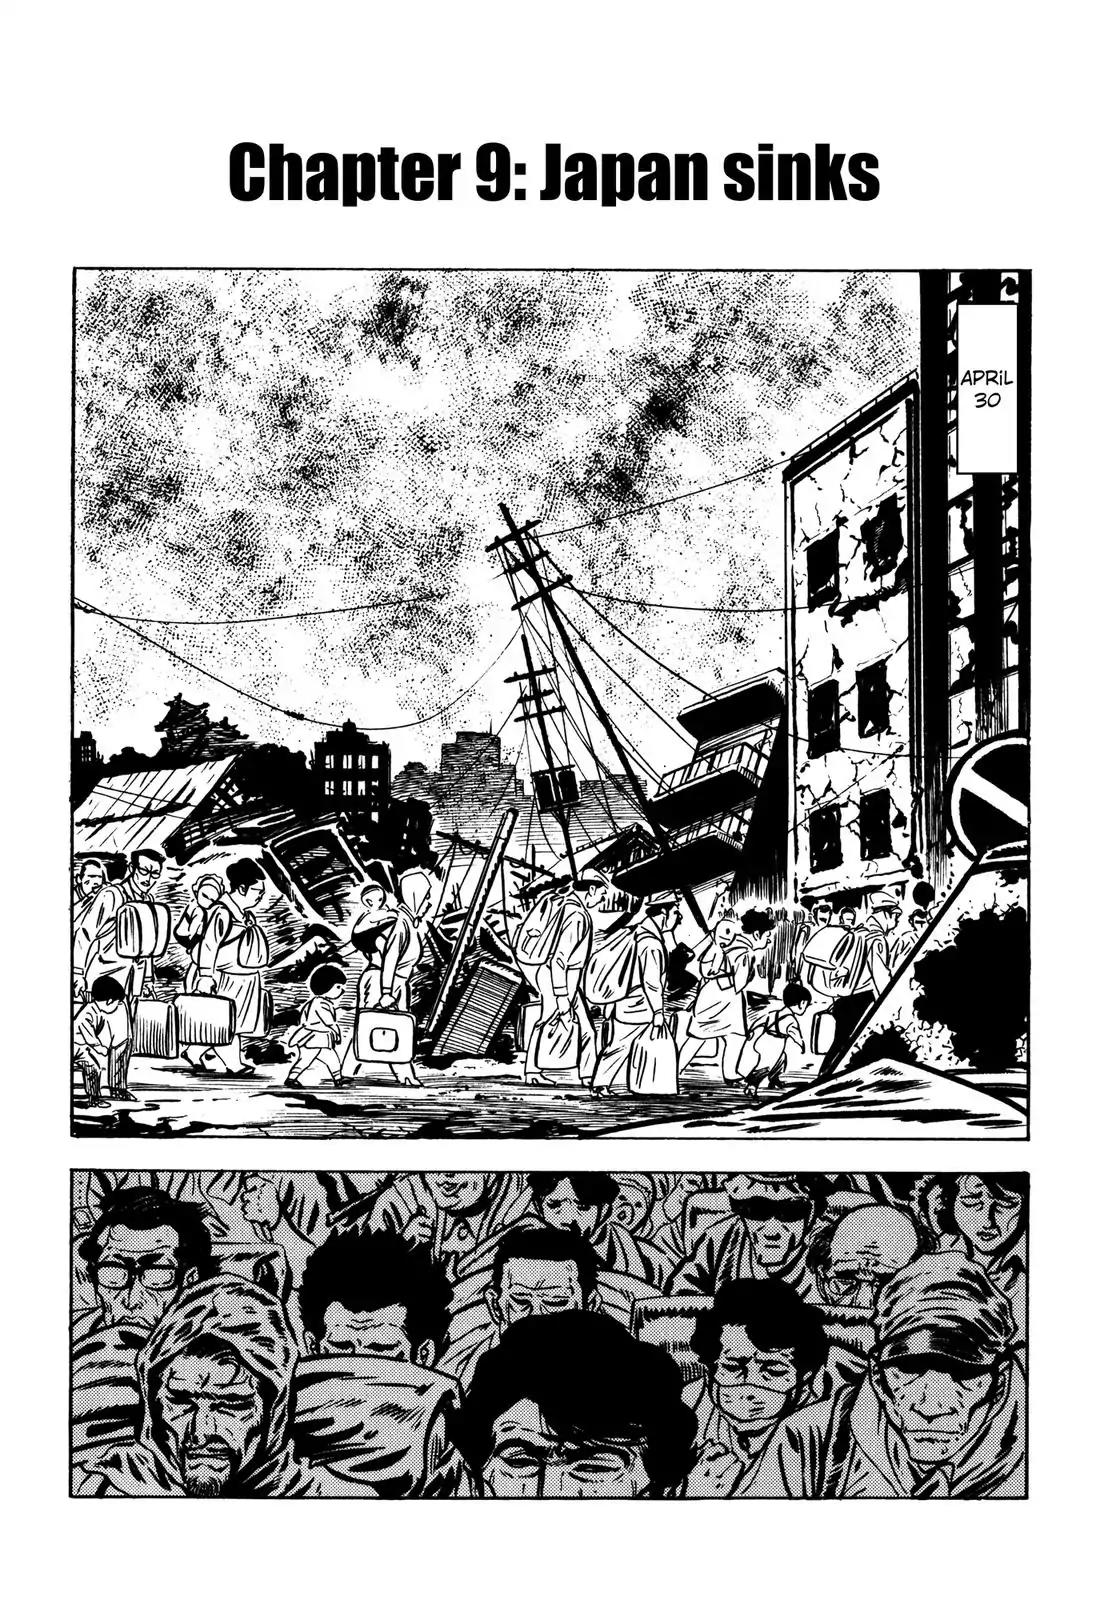 Japan Sinks (Takao Saito) Vol.4 Chapter 9: